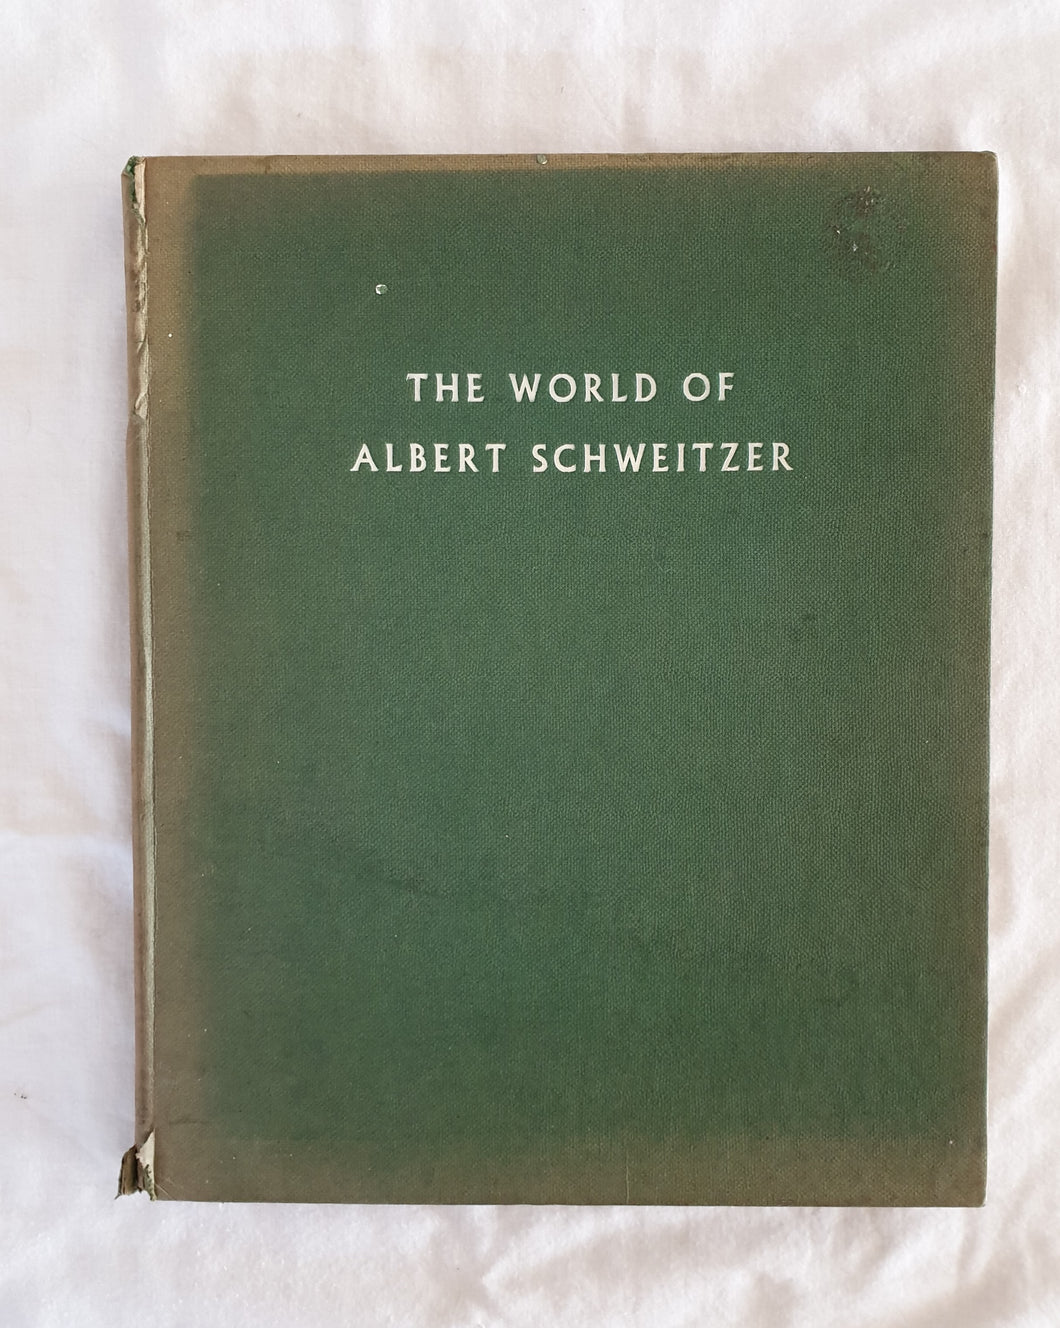 The World of Albert Schweitzer by Erica Anderson